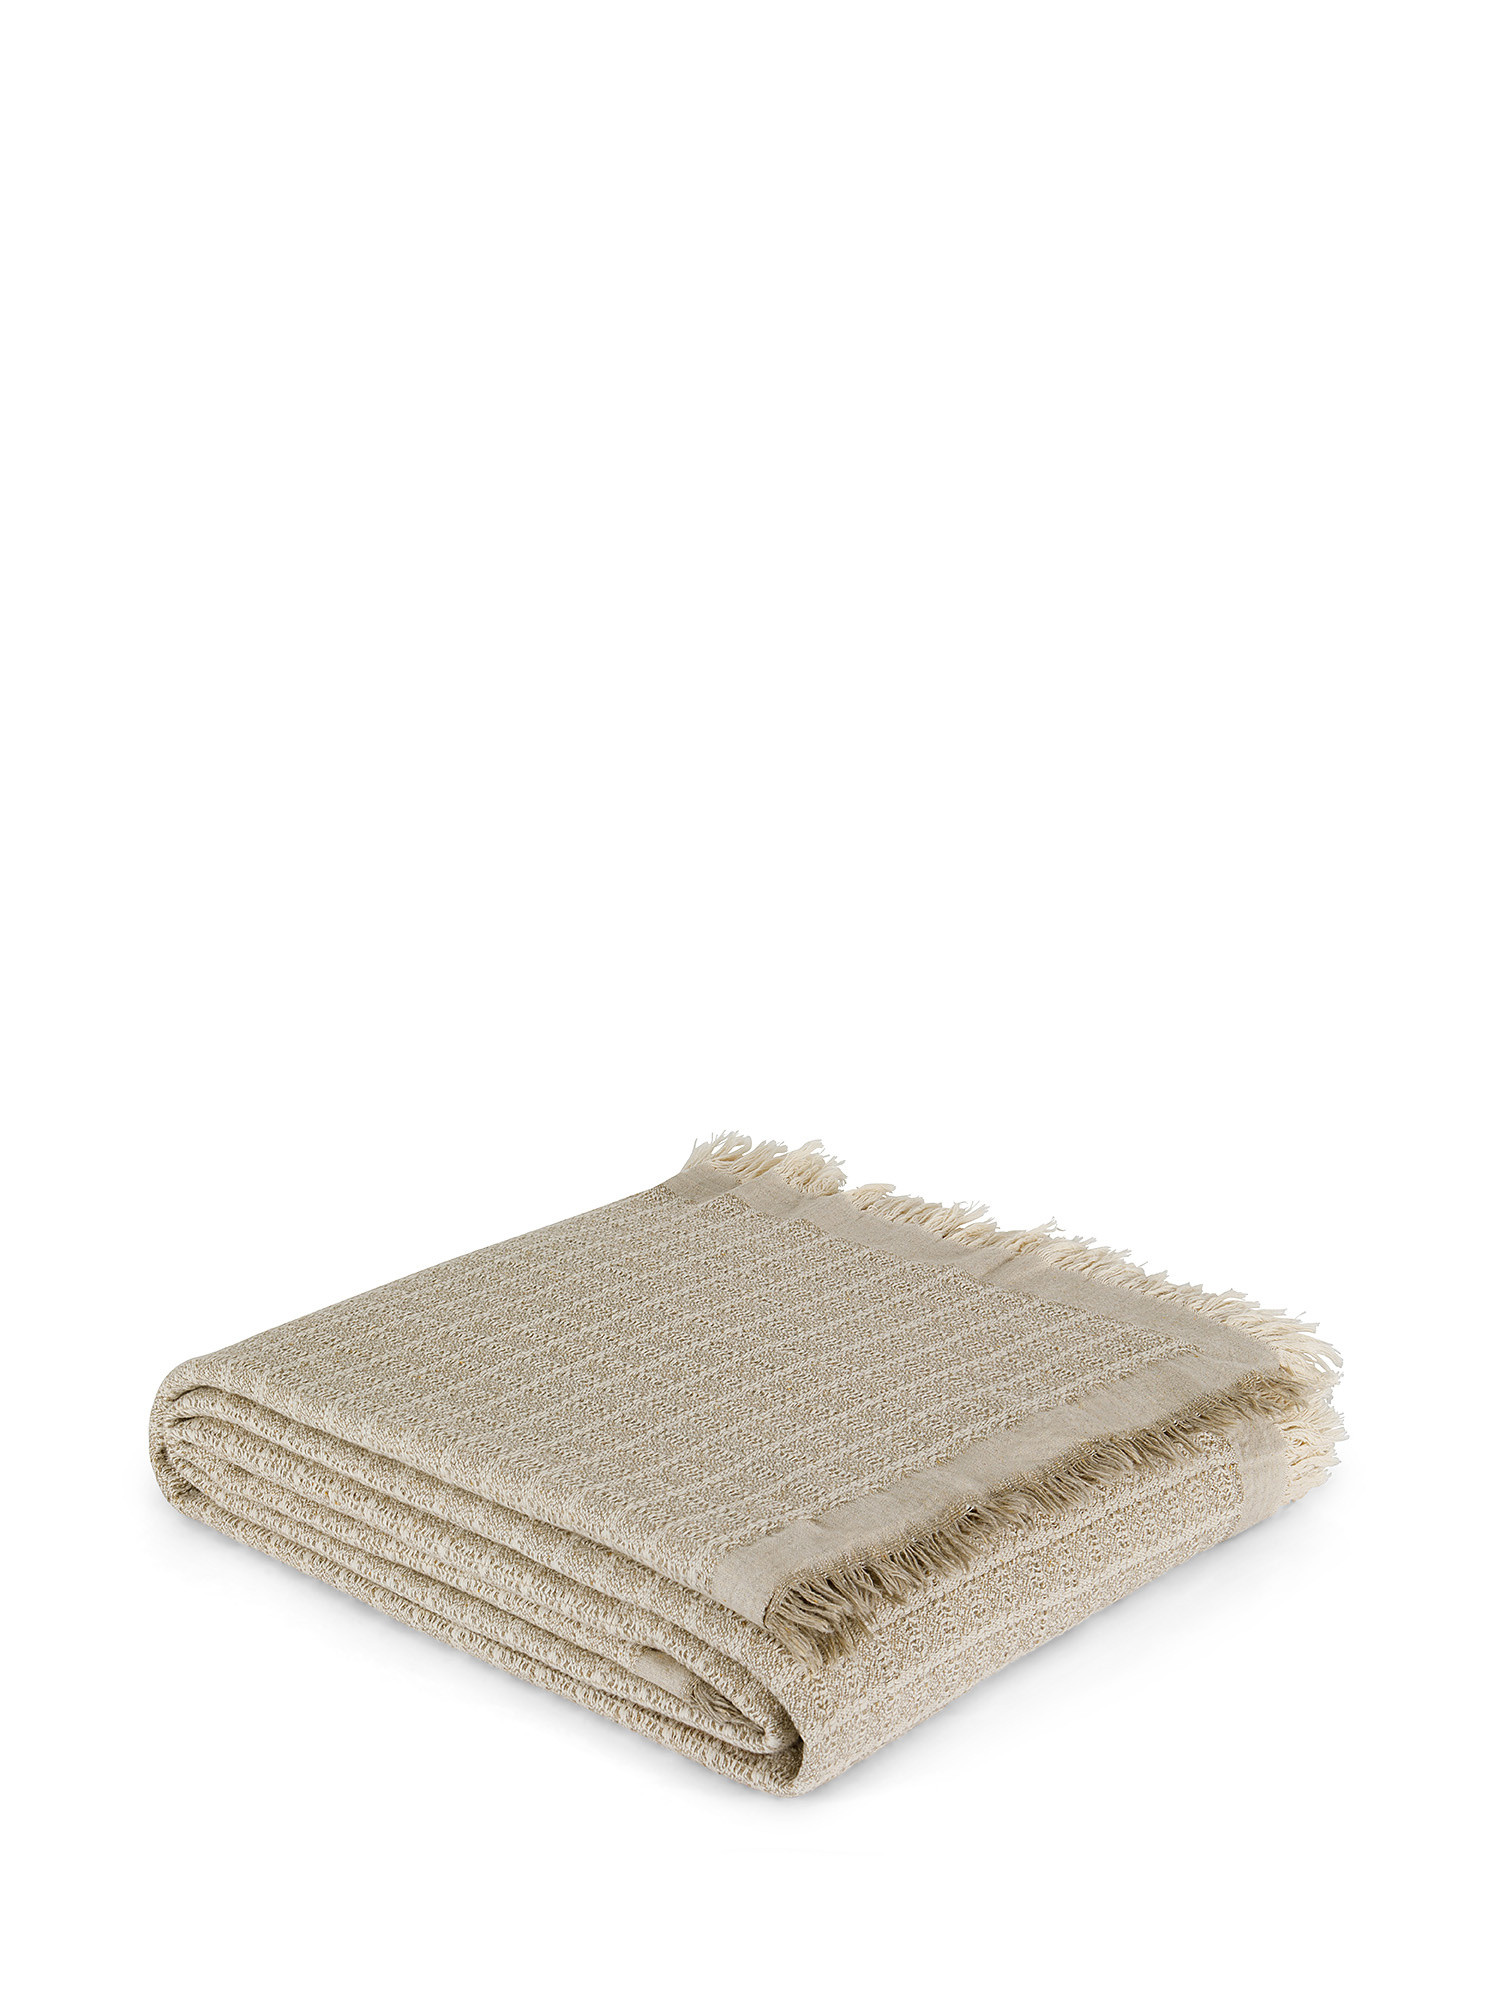 Linen and cotton bedspread with fringes, Light Beige, large image number 0